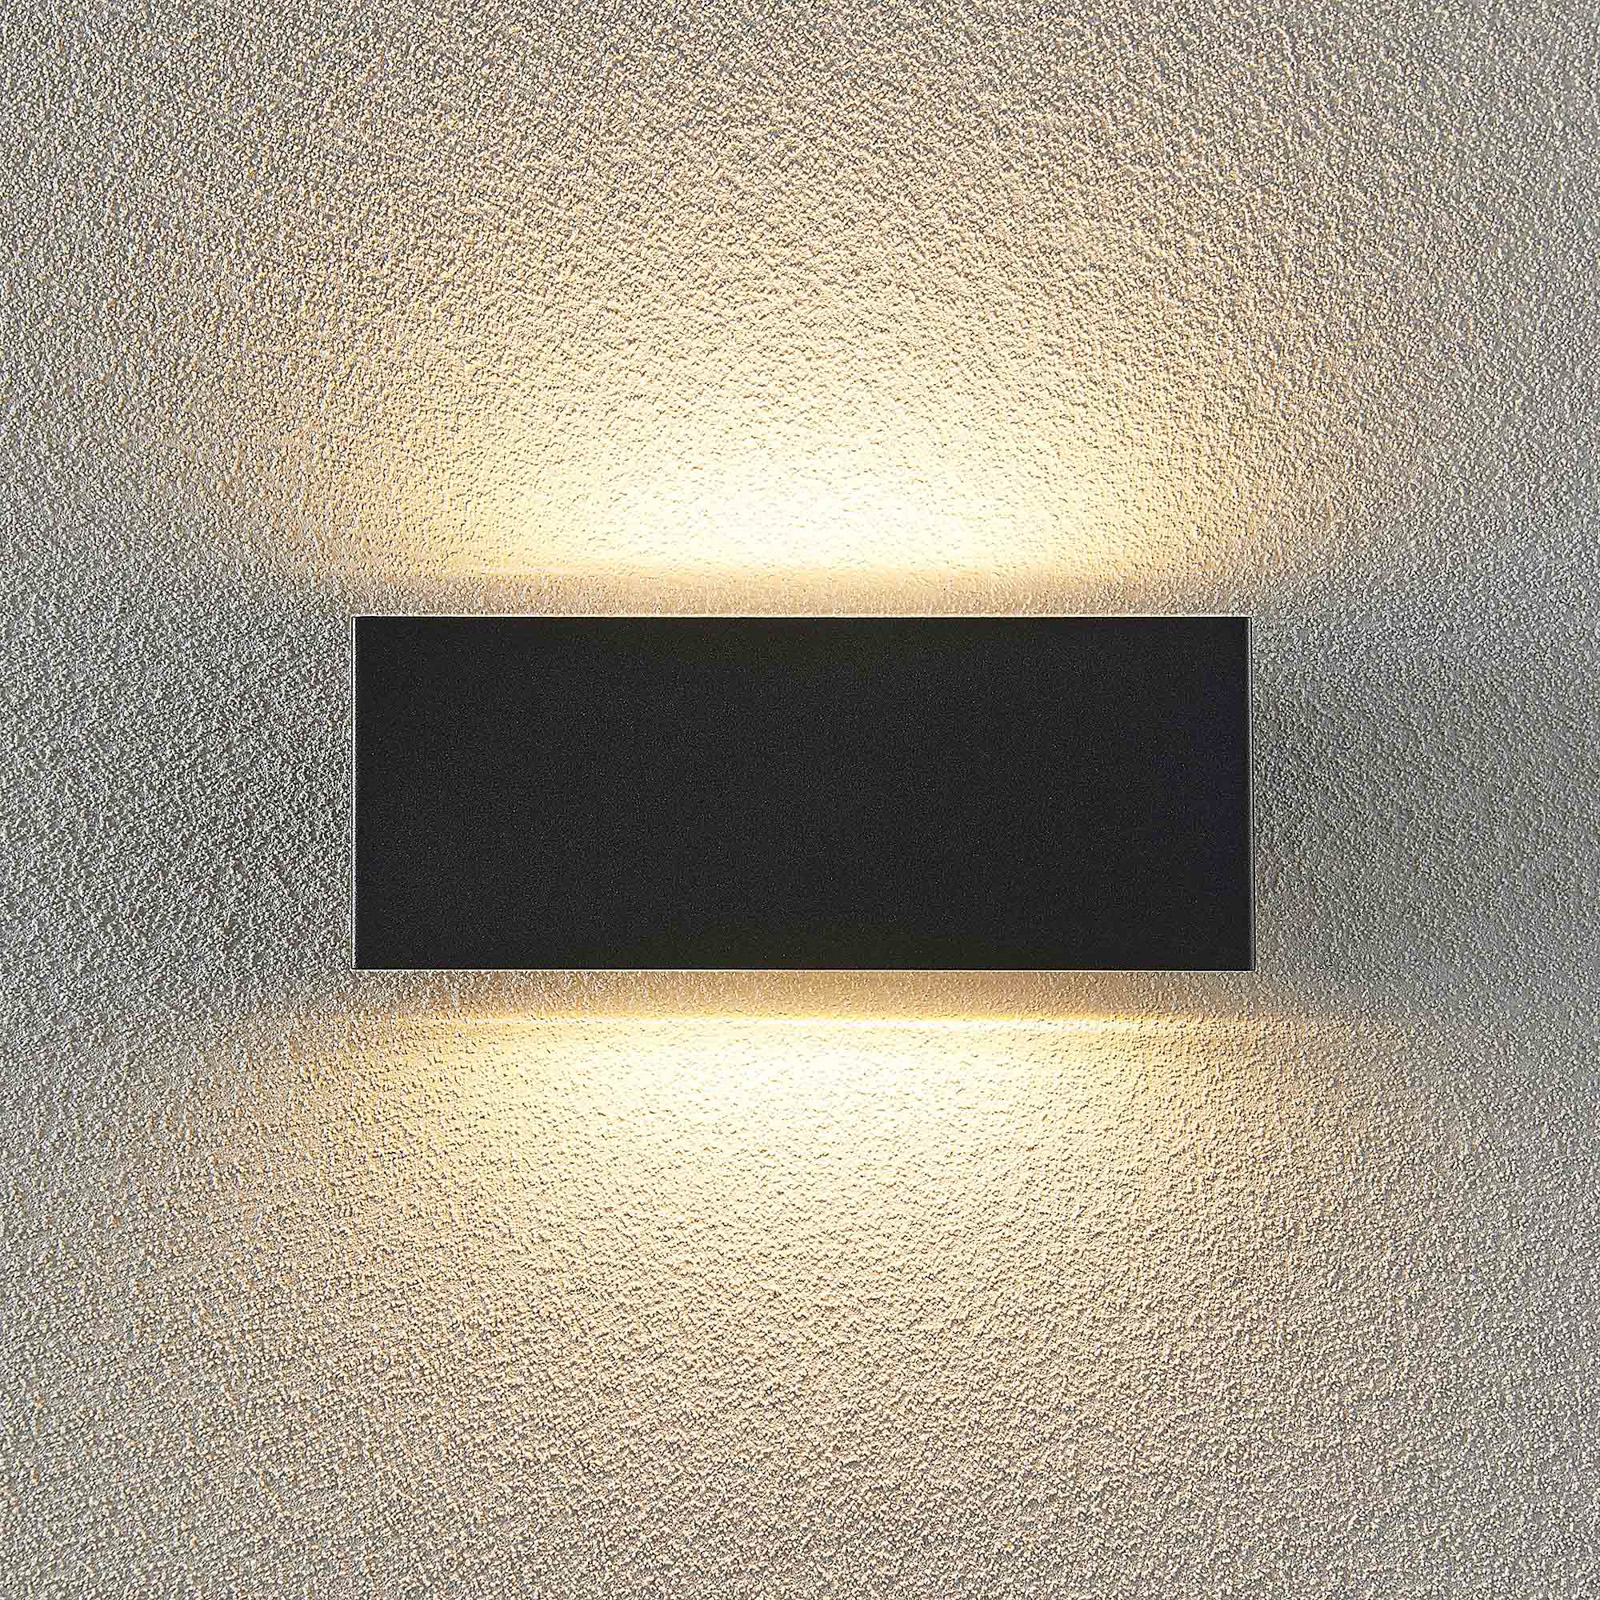 Lindby Kiban LED outdoor wall lamp in dark grey